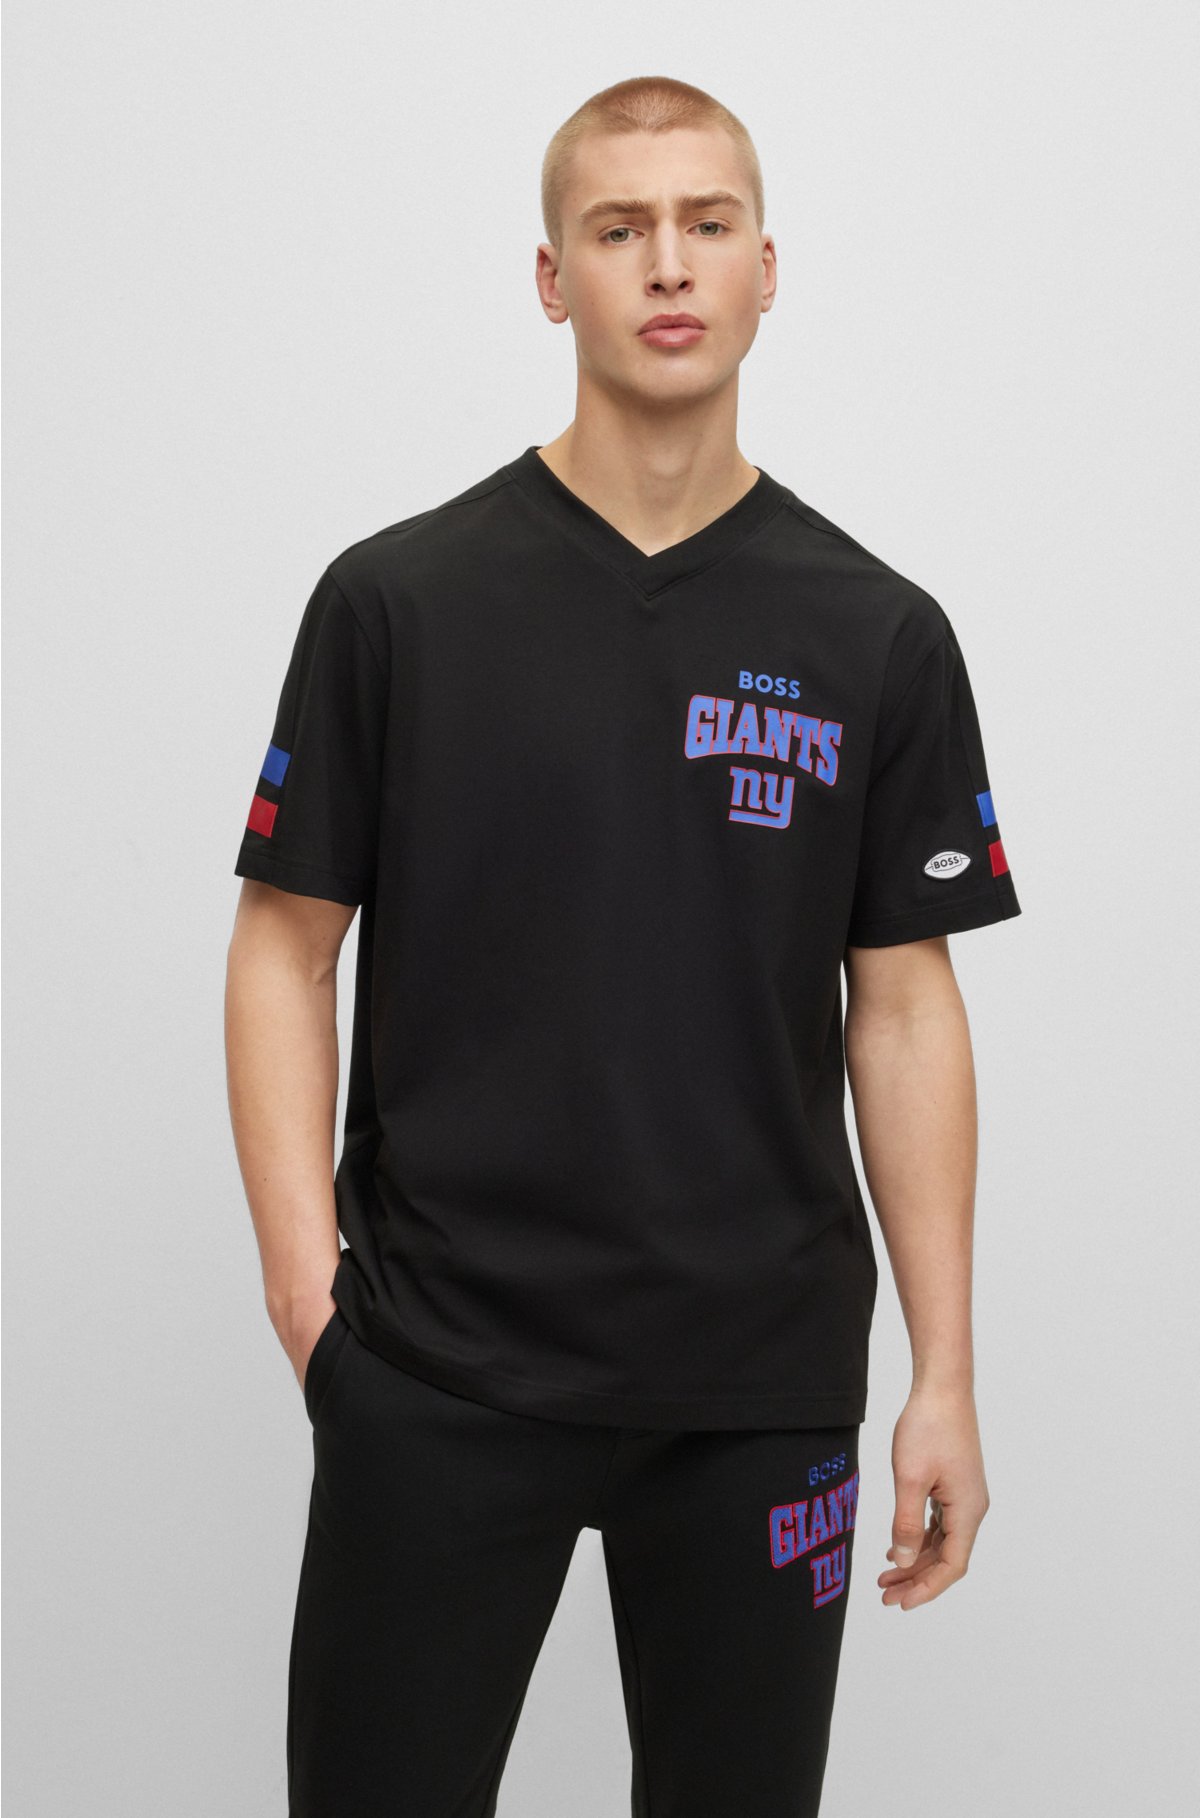 BOSS x NFL cotton-blend T-shirt with collaborative branding, Giants